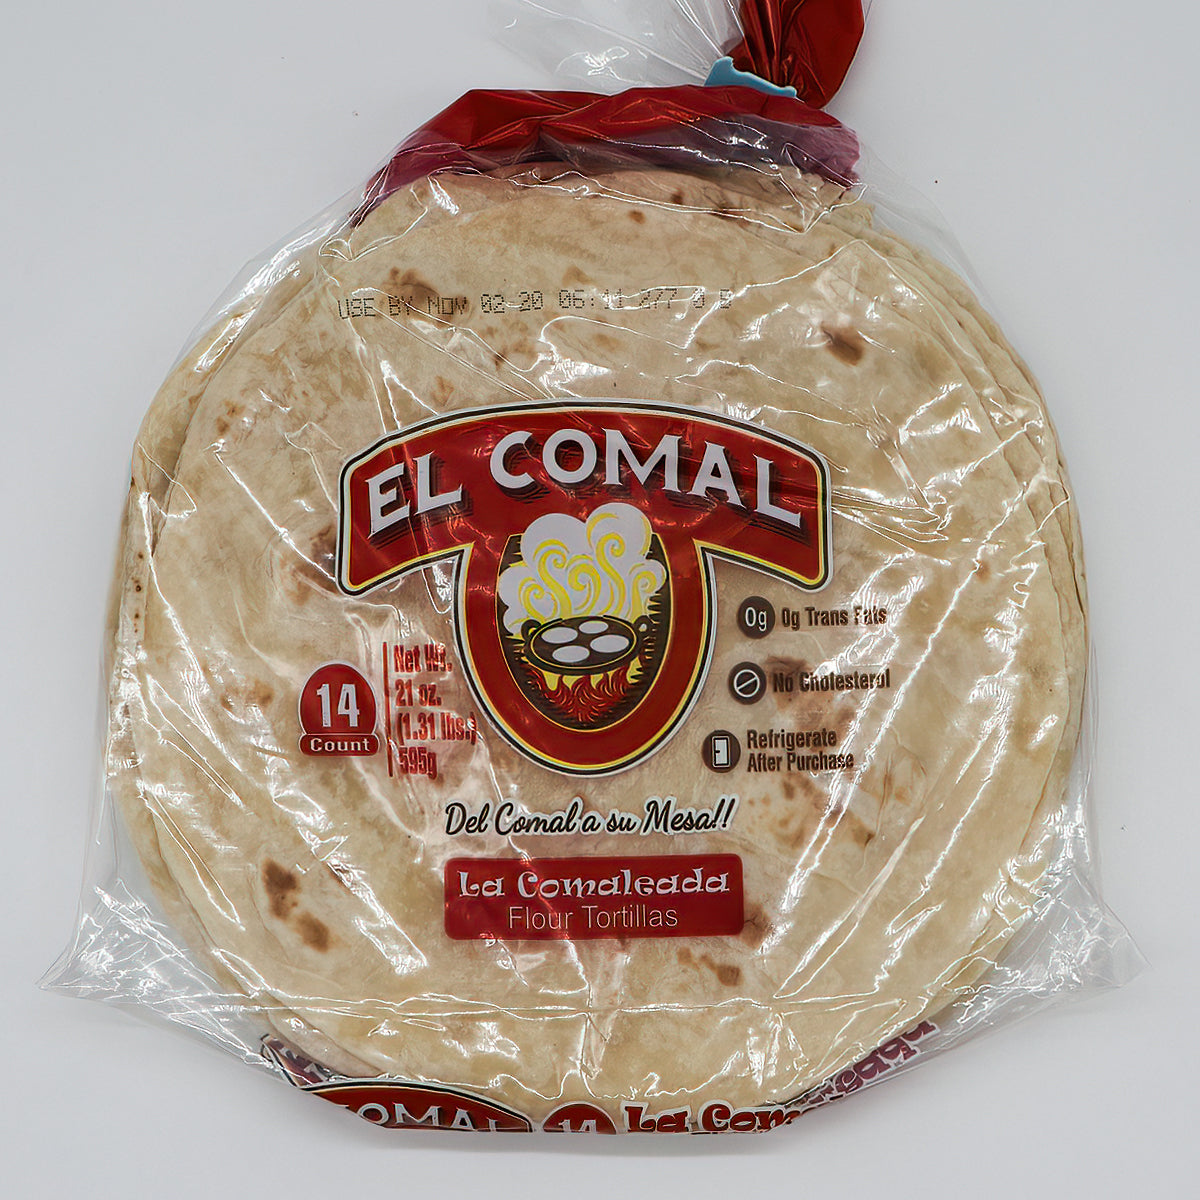 File:Tortillas on comal.jpg - Wikimedia Commons